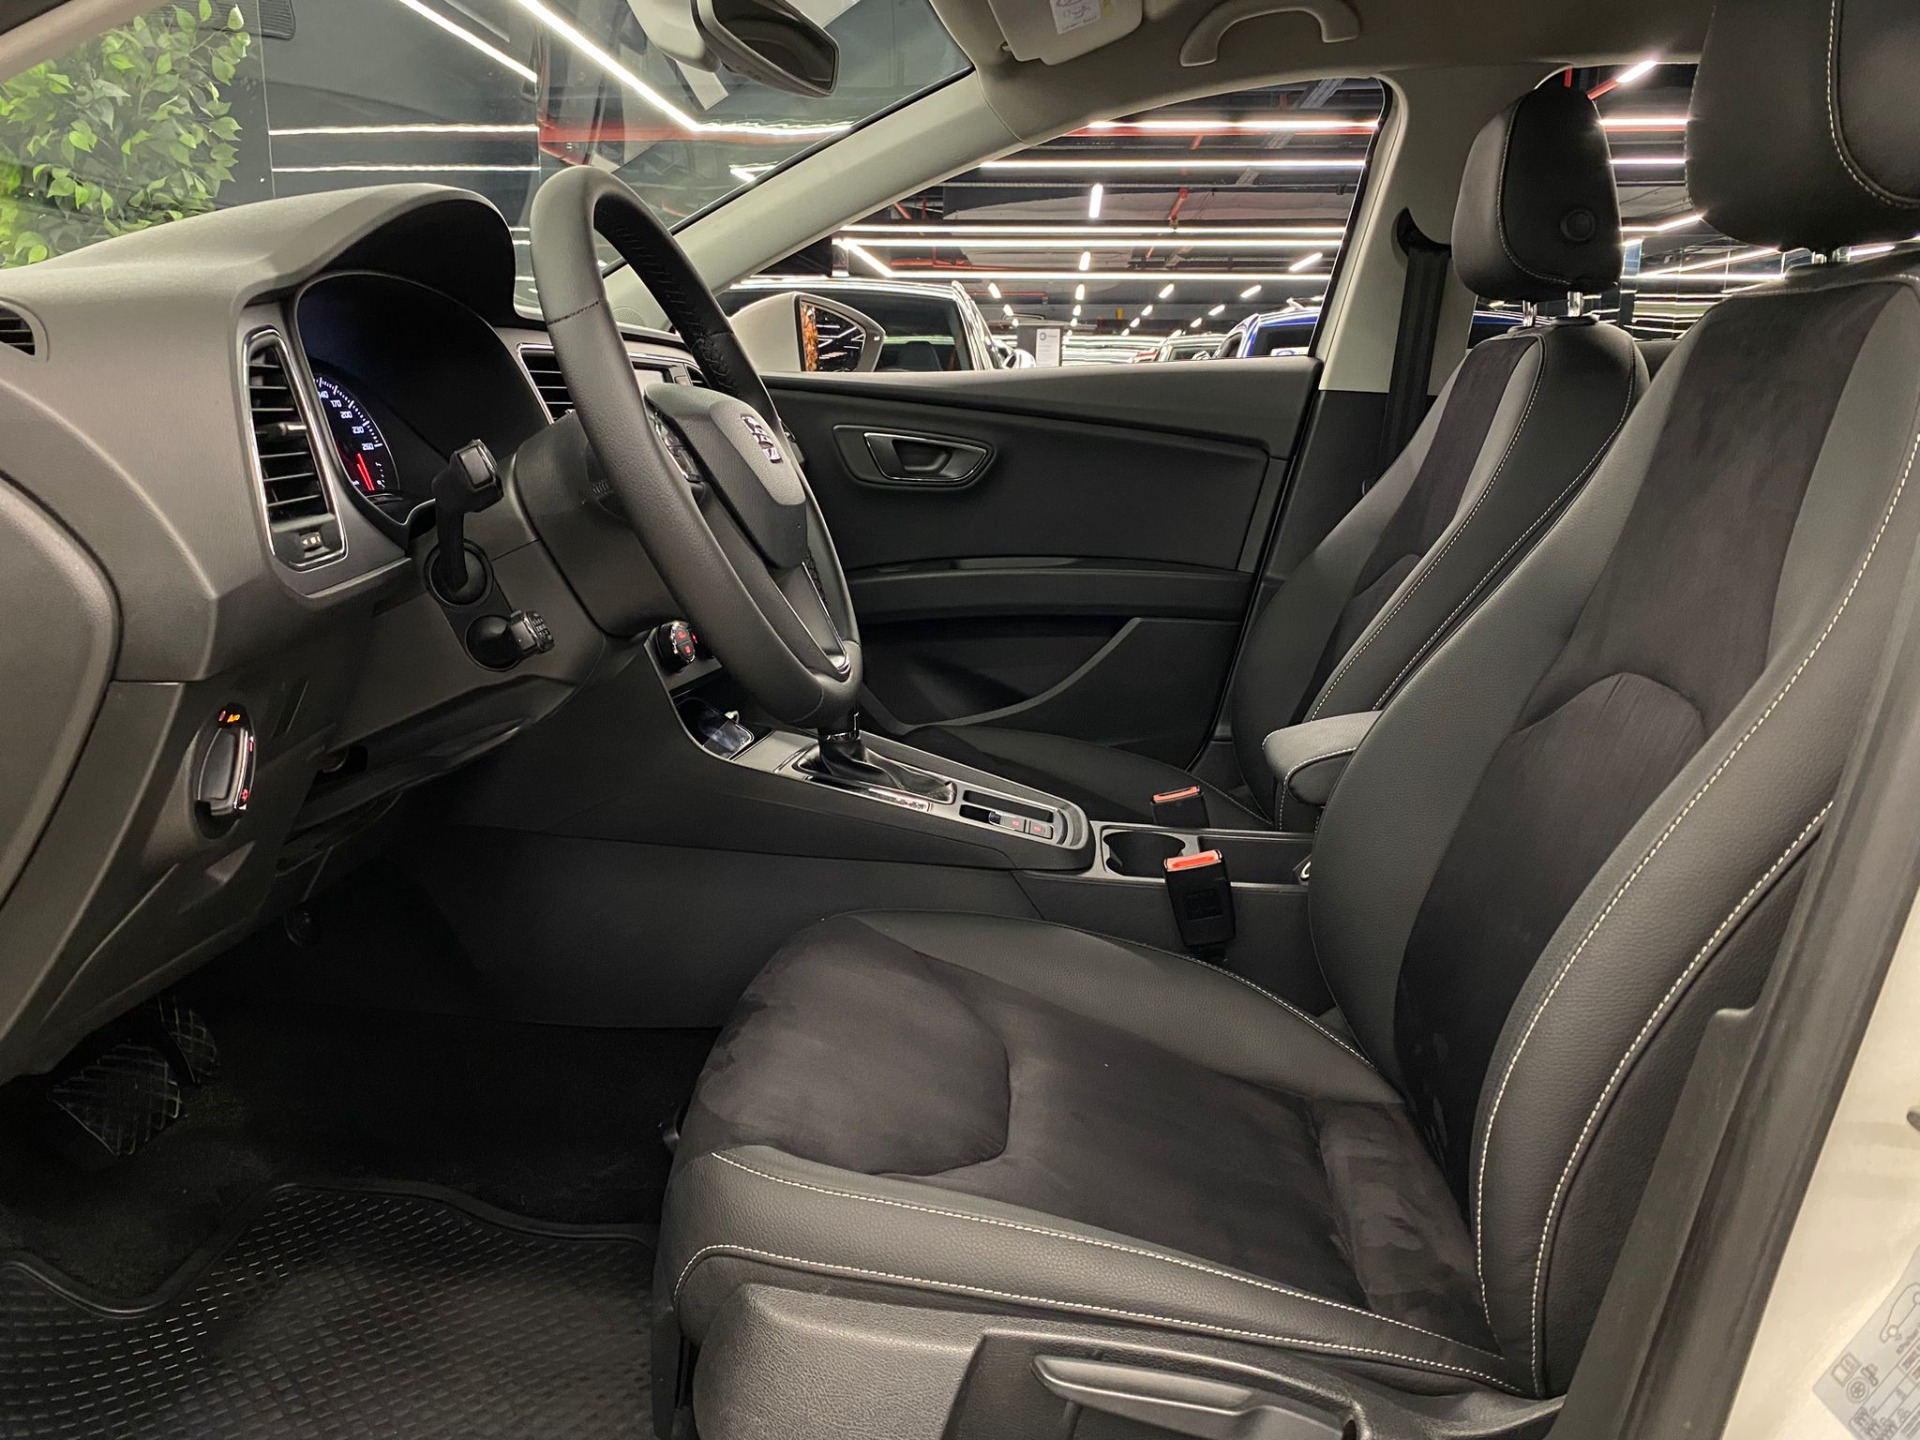 2017 Model Seat 1.6 TDI 115 Ps Style-15